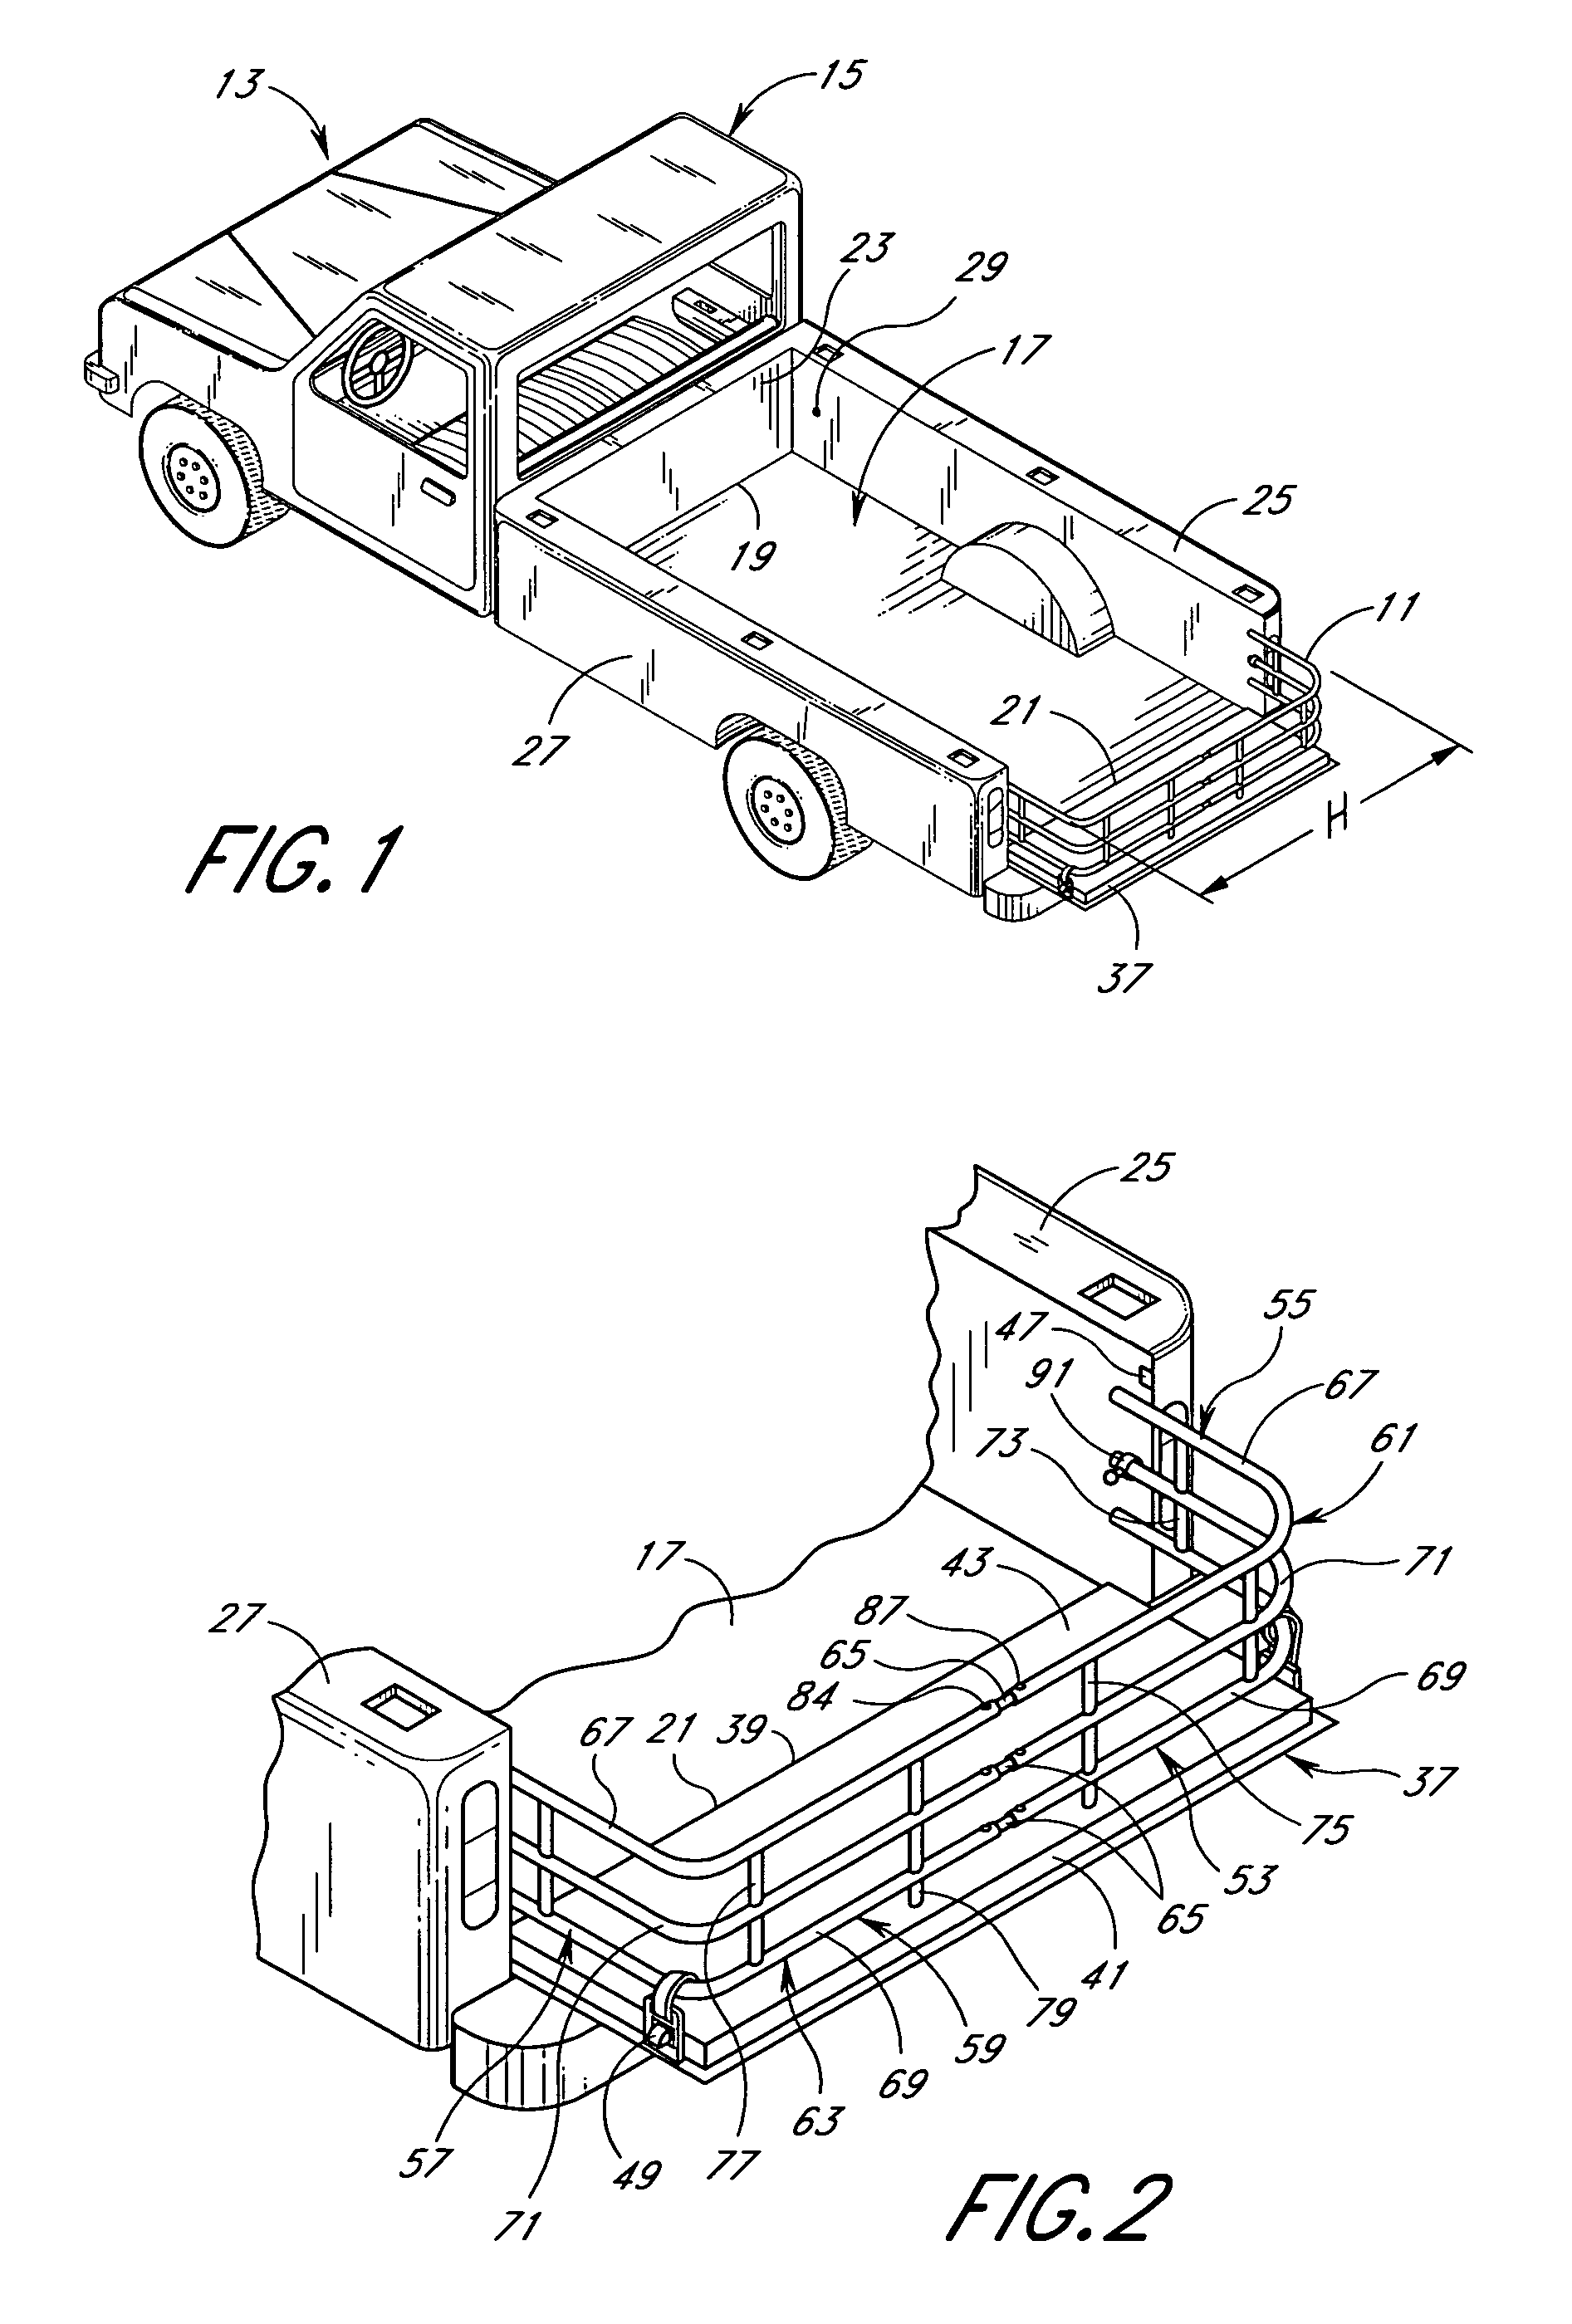 Vehicle cargo bed extender